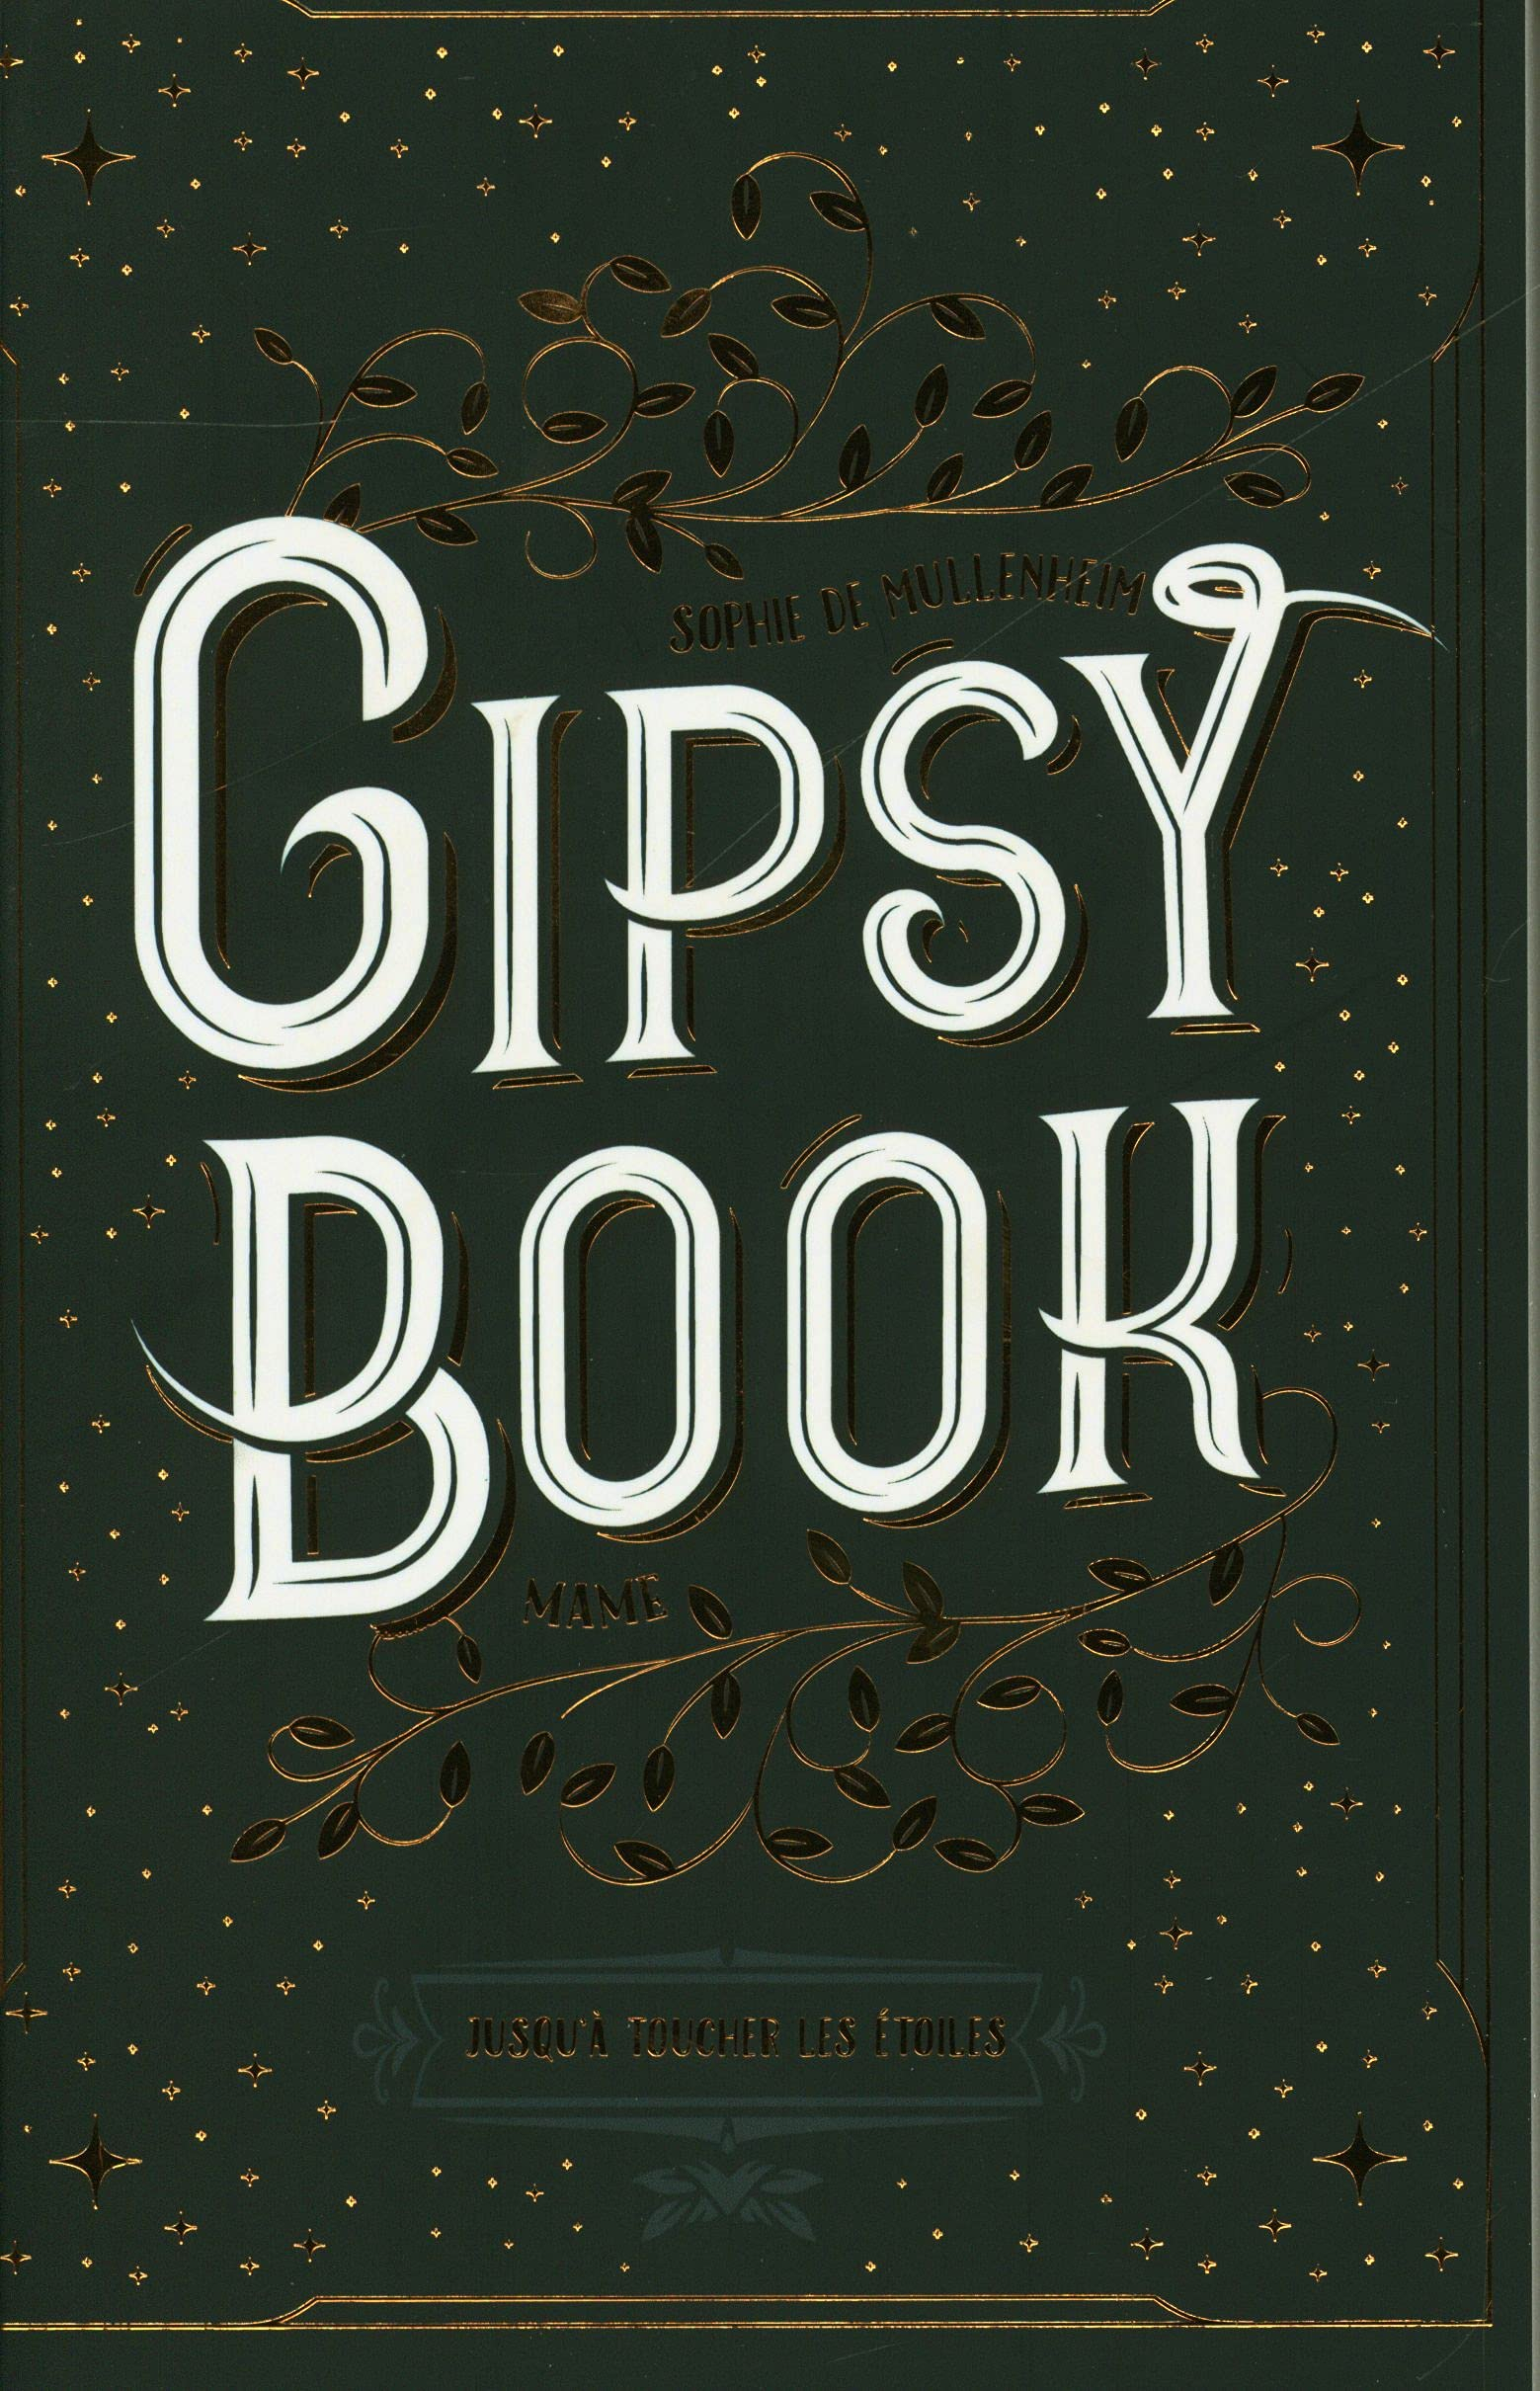 Gipsy book. Vol. 5. Jusqu'à toucher les étoiles